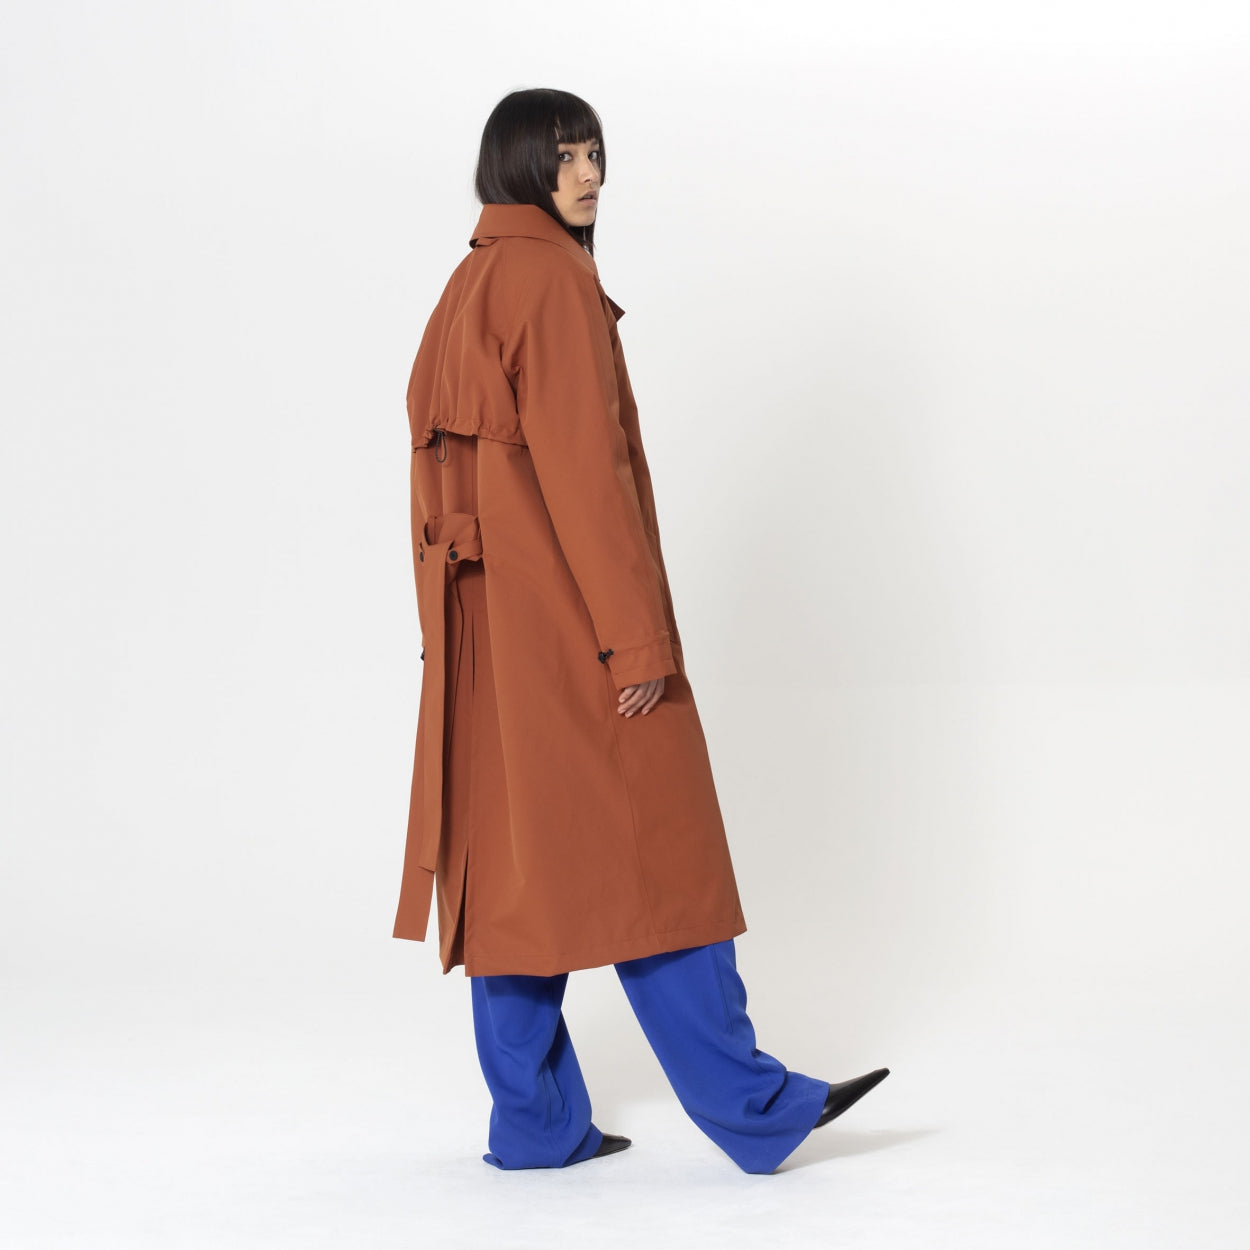 Gale GOFRANCK jacket 2023-2024 womens waterproof winter jacket product image